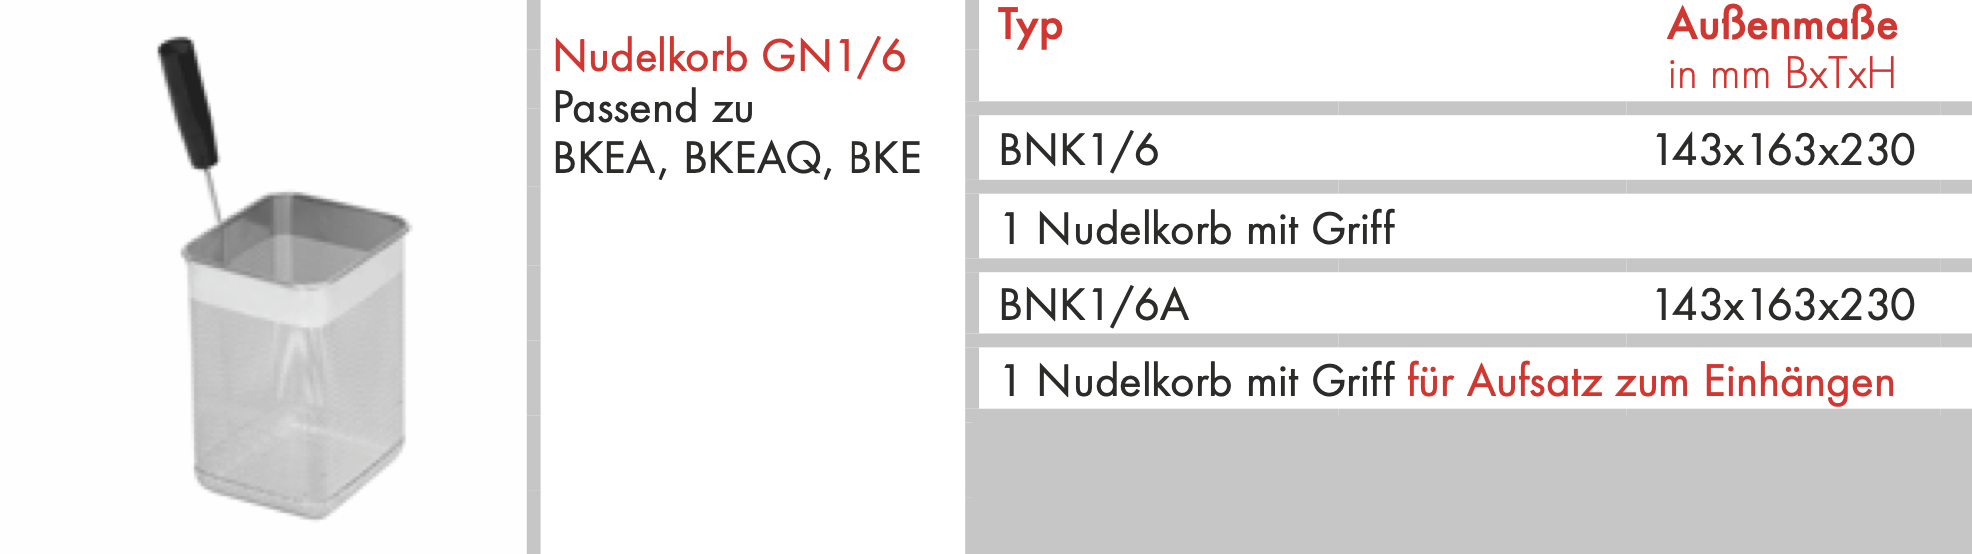 Nudelkorb-GN1-6